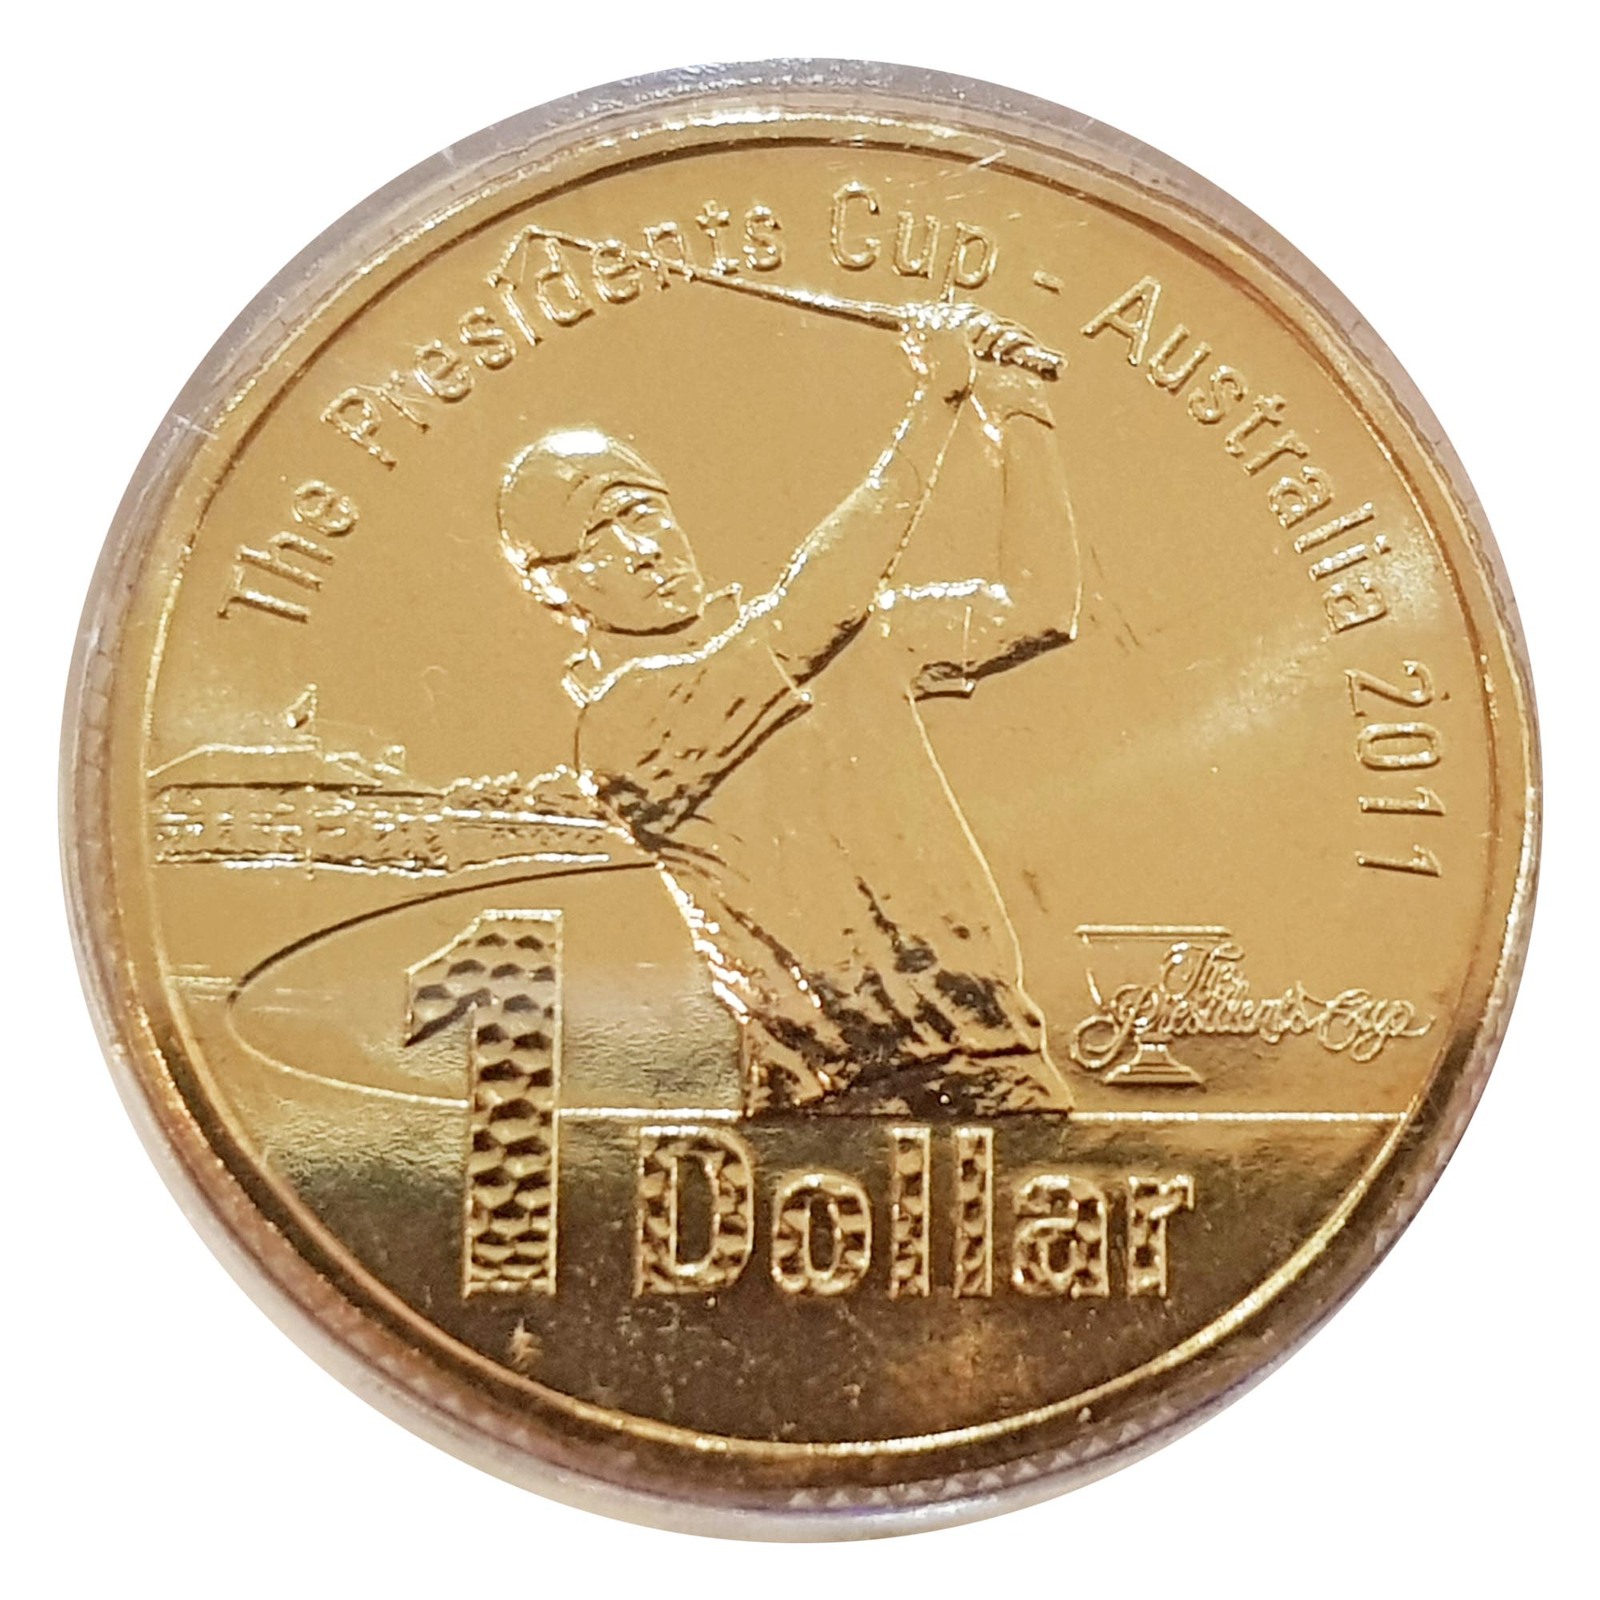 Australia 2011 The Presidents Cup Golf 1 Dollar UNC Coin